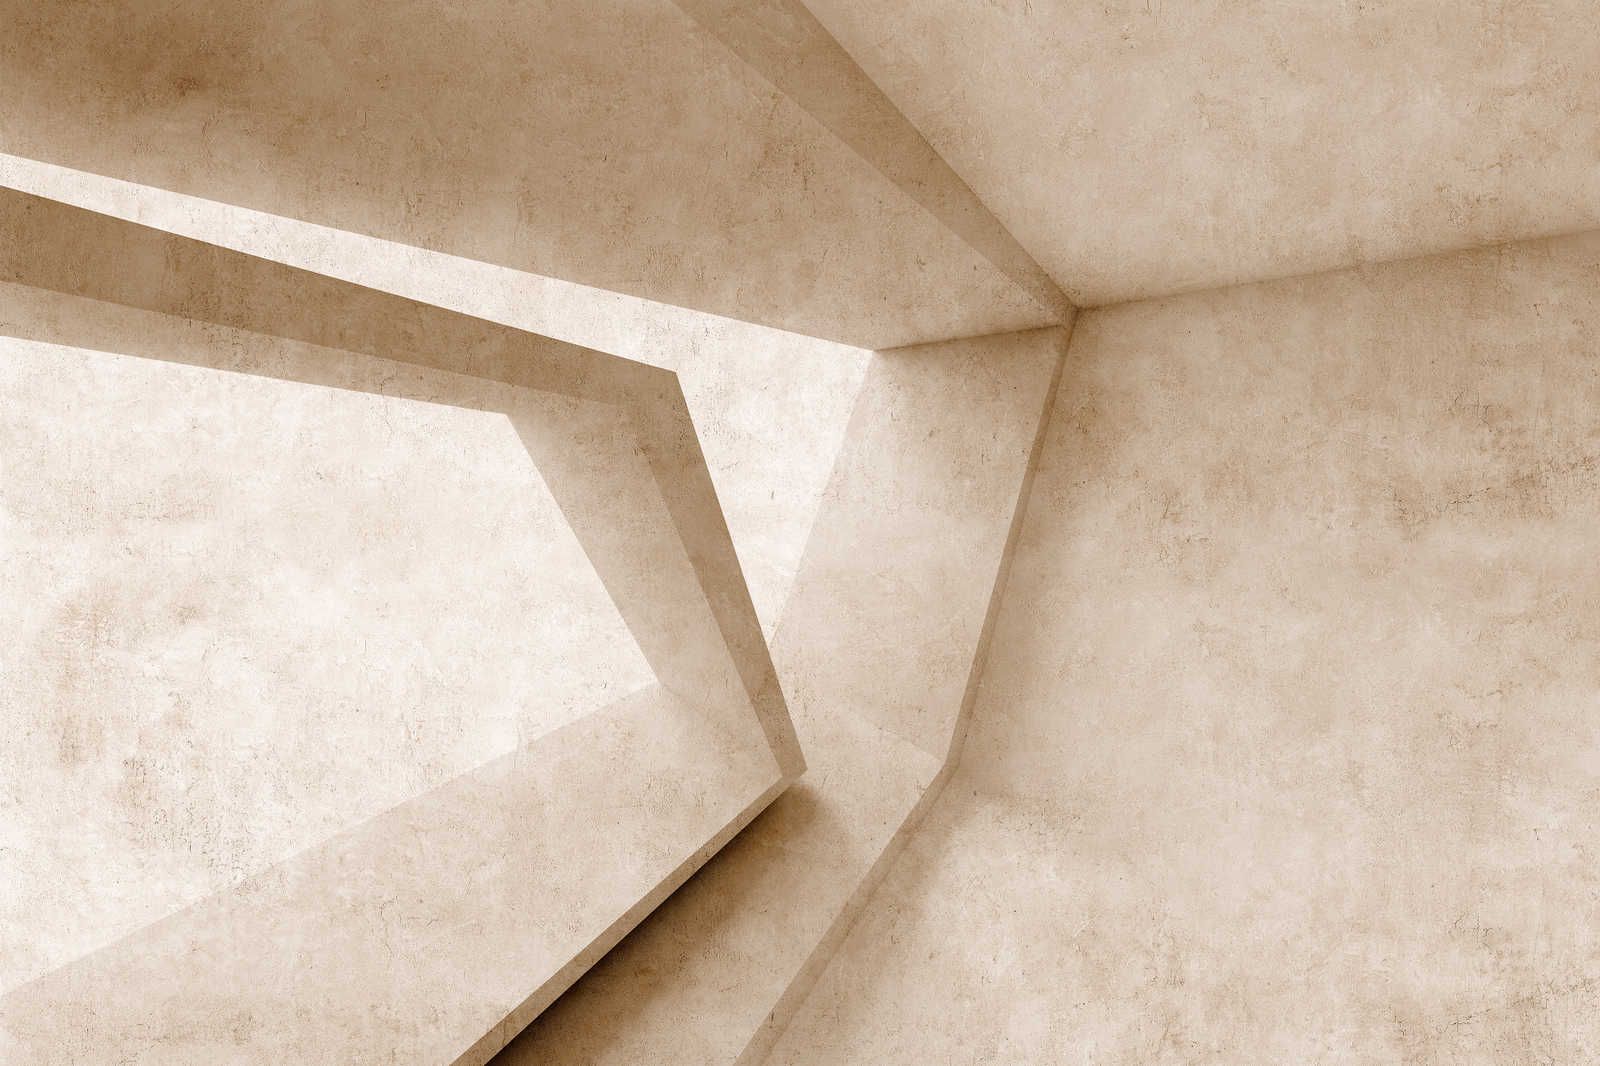             Futura 1 - Toile béton motif 3D - 0,90 m x 0,60 m
        